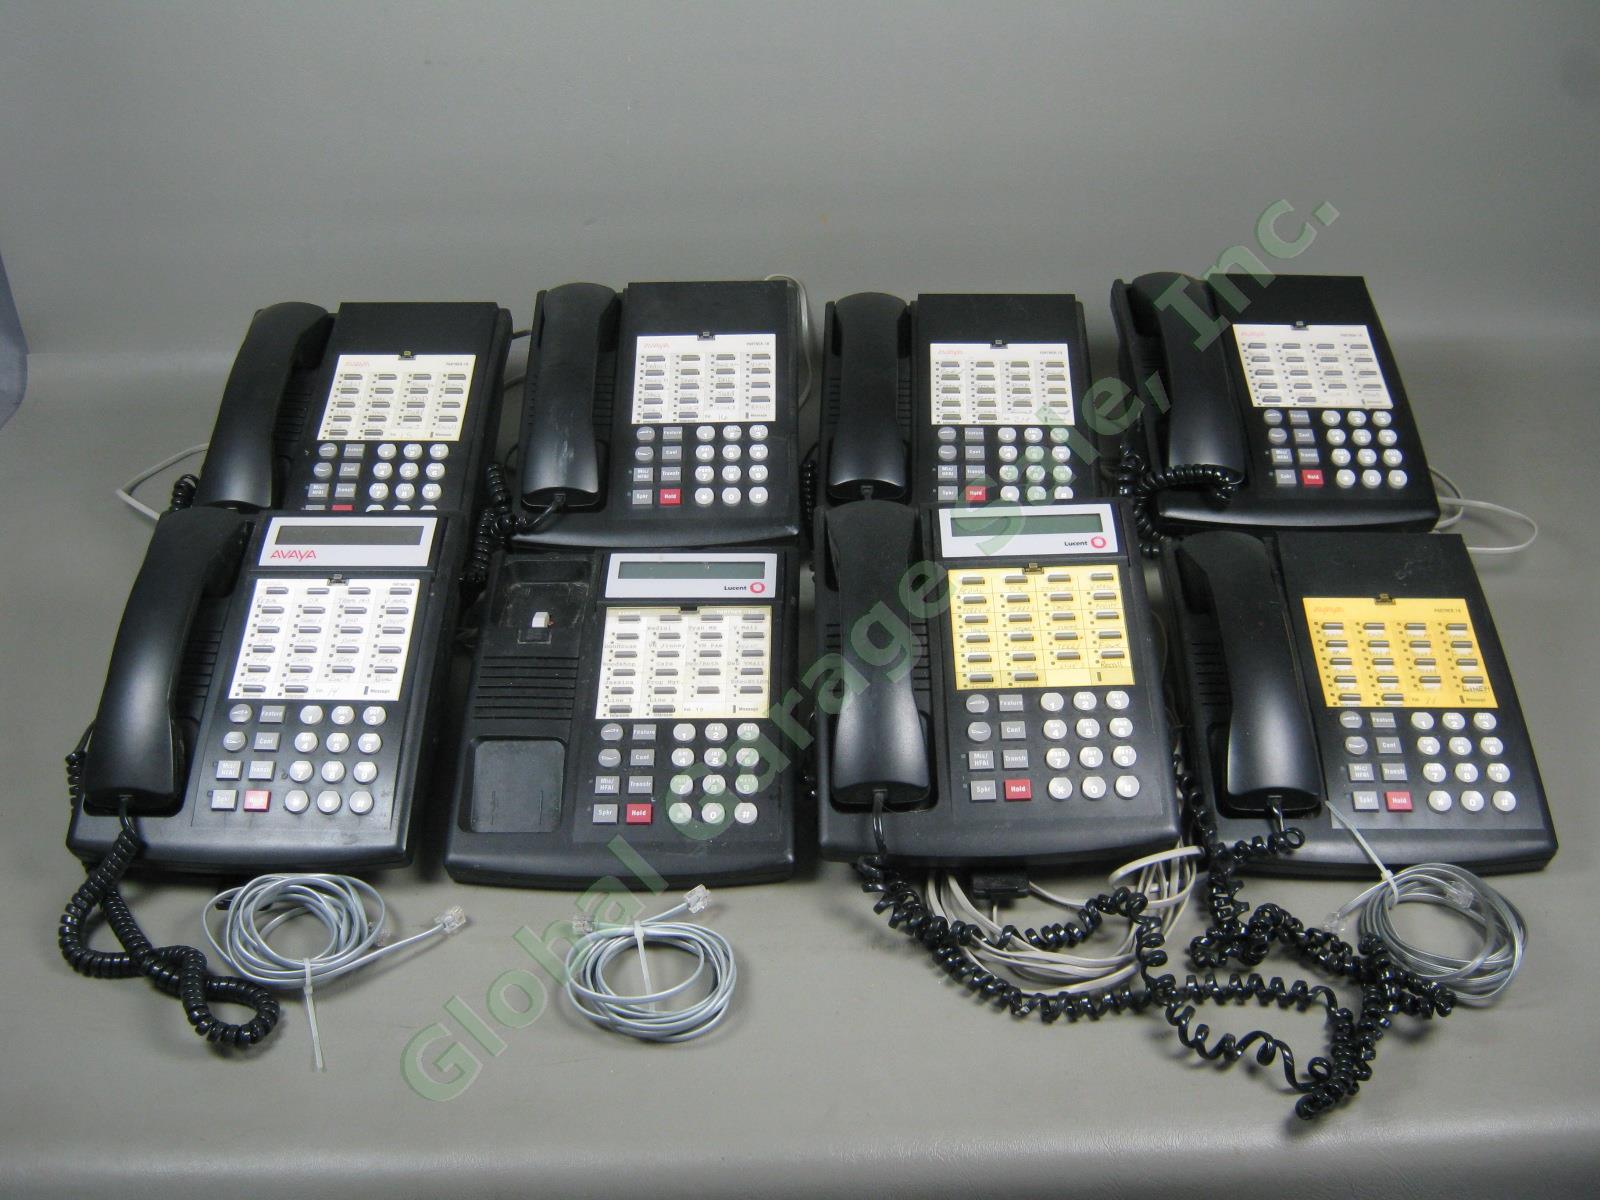 8 Lucent Avaya Partner Black Business Phone Lot 3x18D 108236712 7311H14E003 5x18